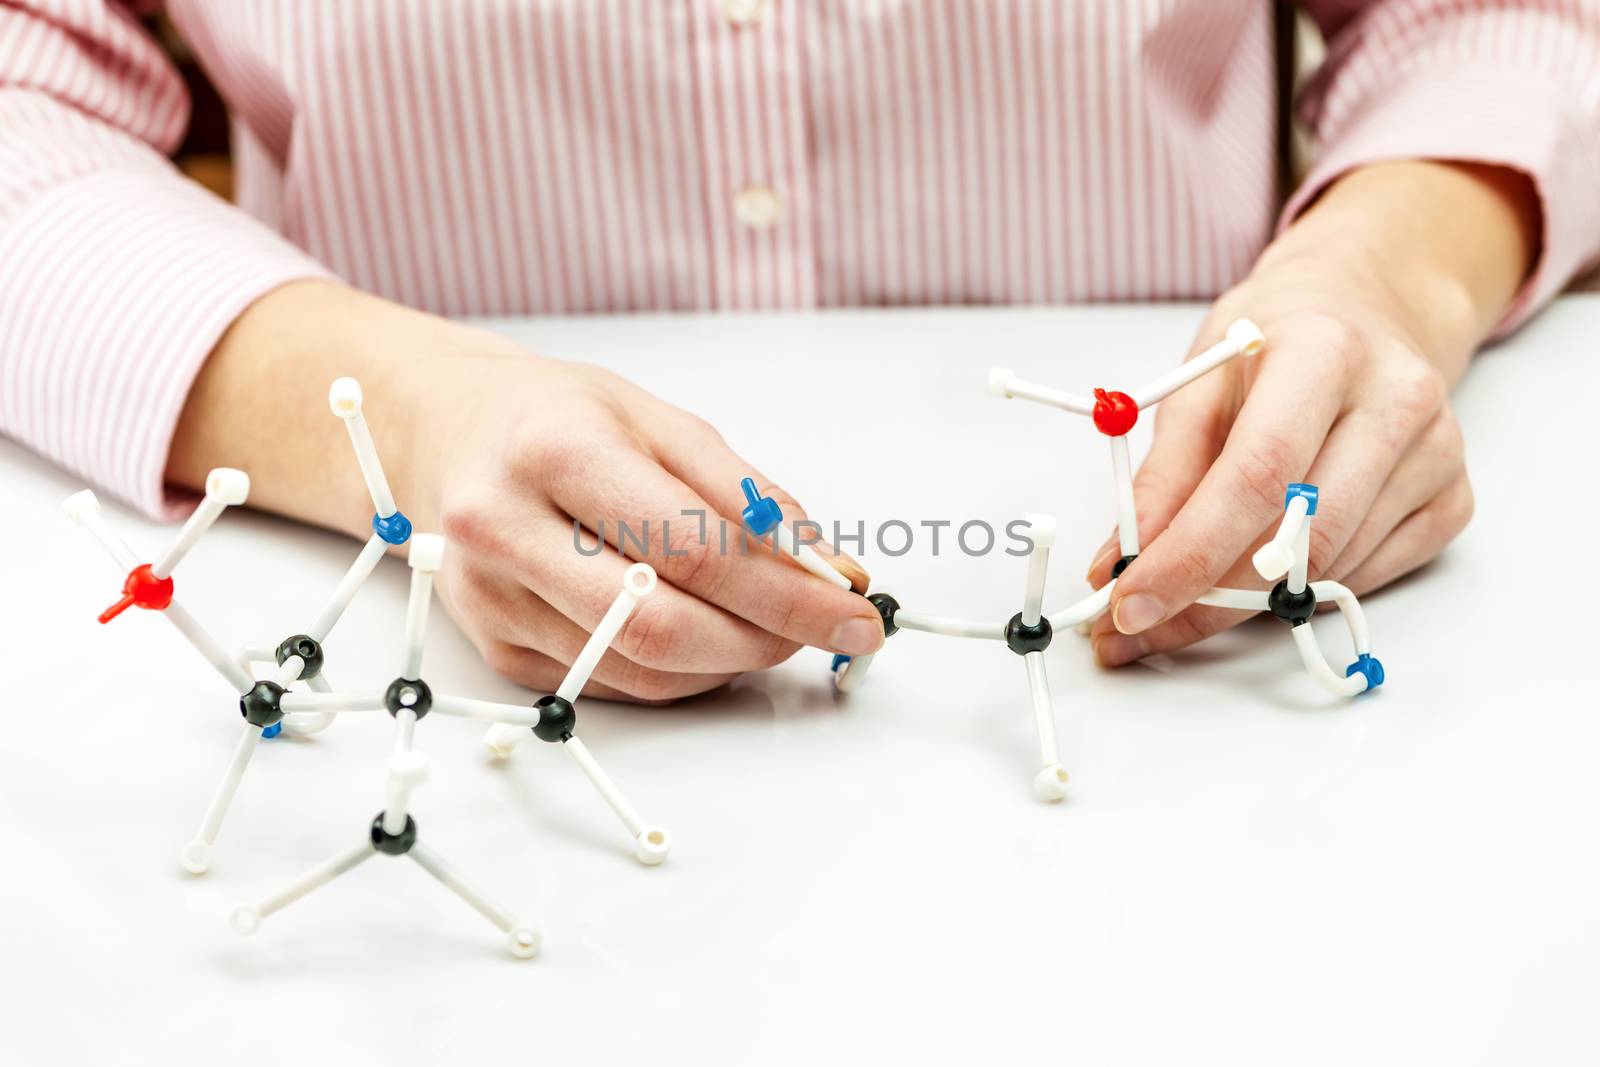 Student assembling molecule models by elenathewise